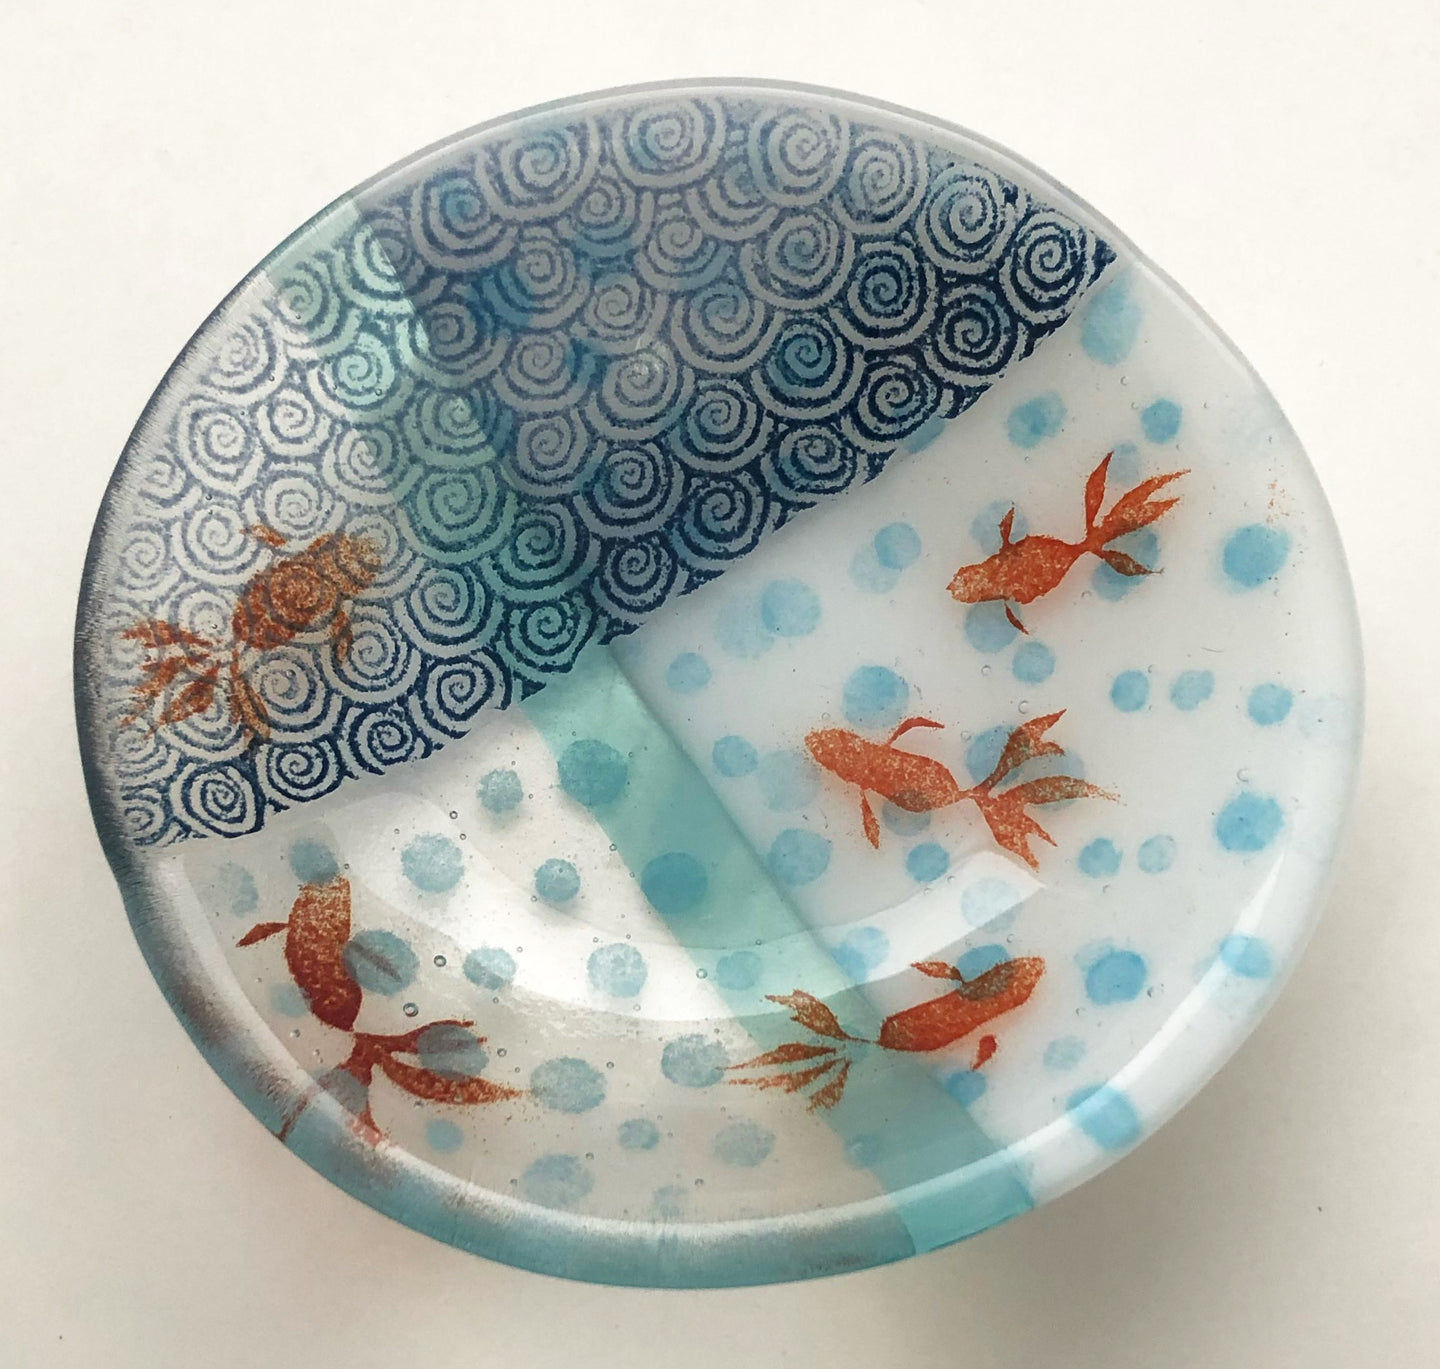 86. Goldfish Plate